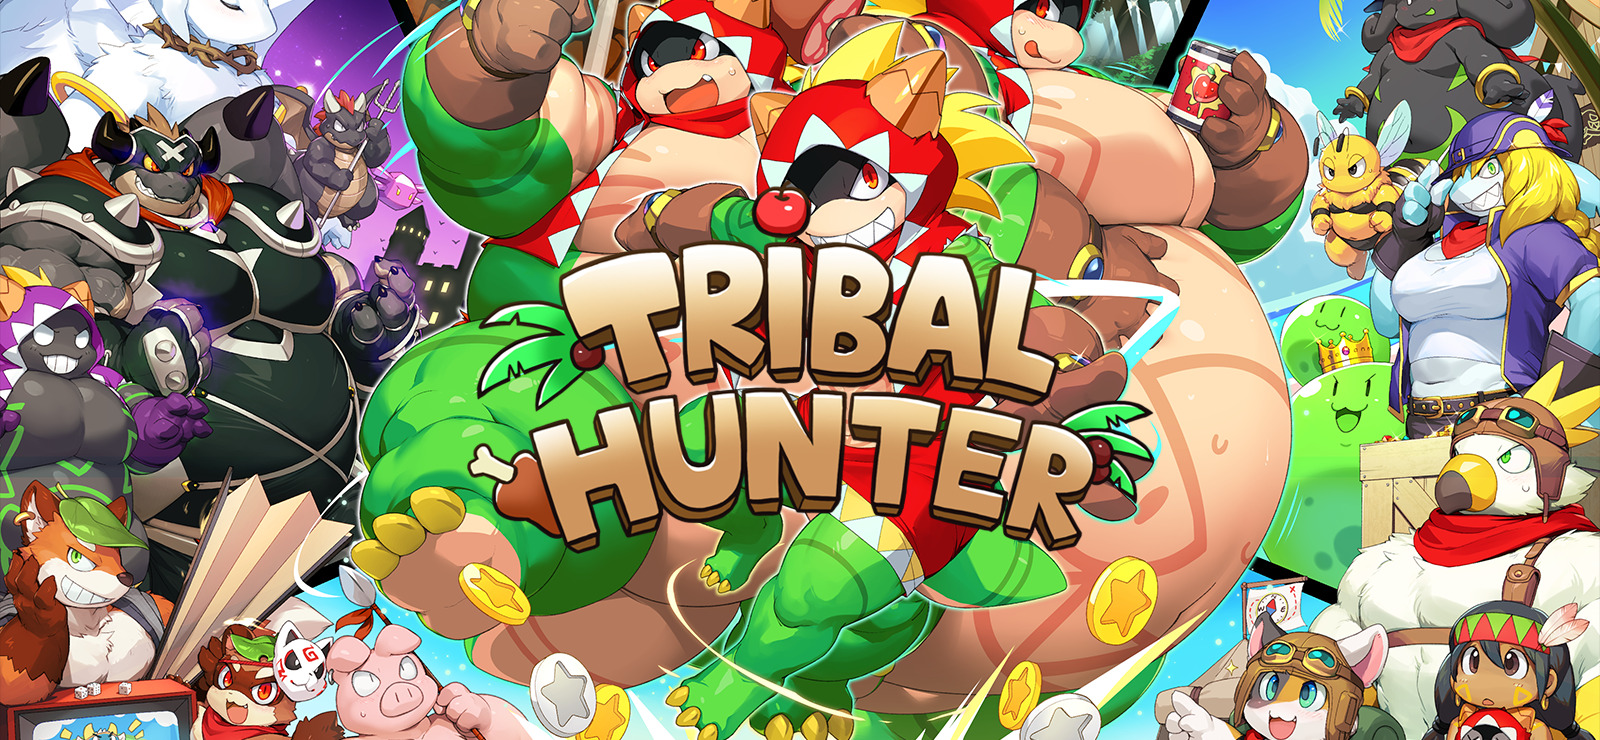 Tribal Hunter Soundtrack on Steam